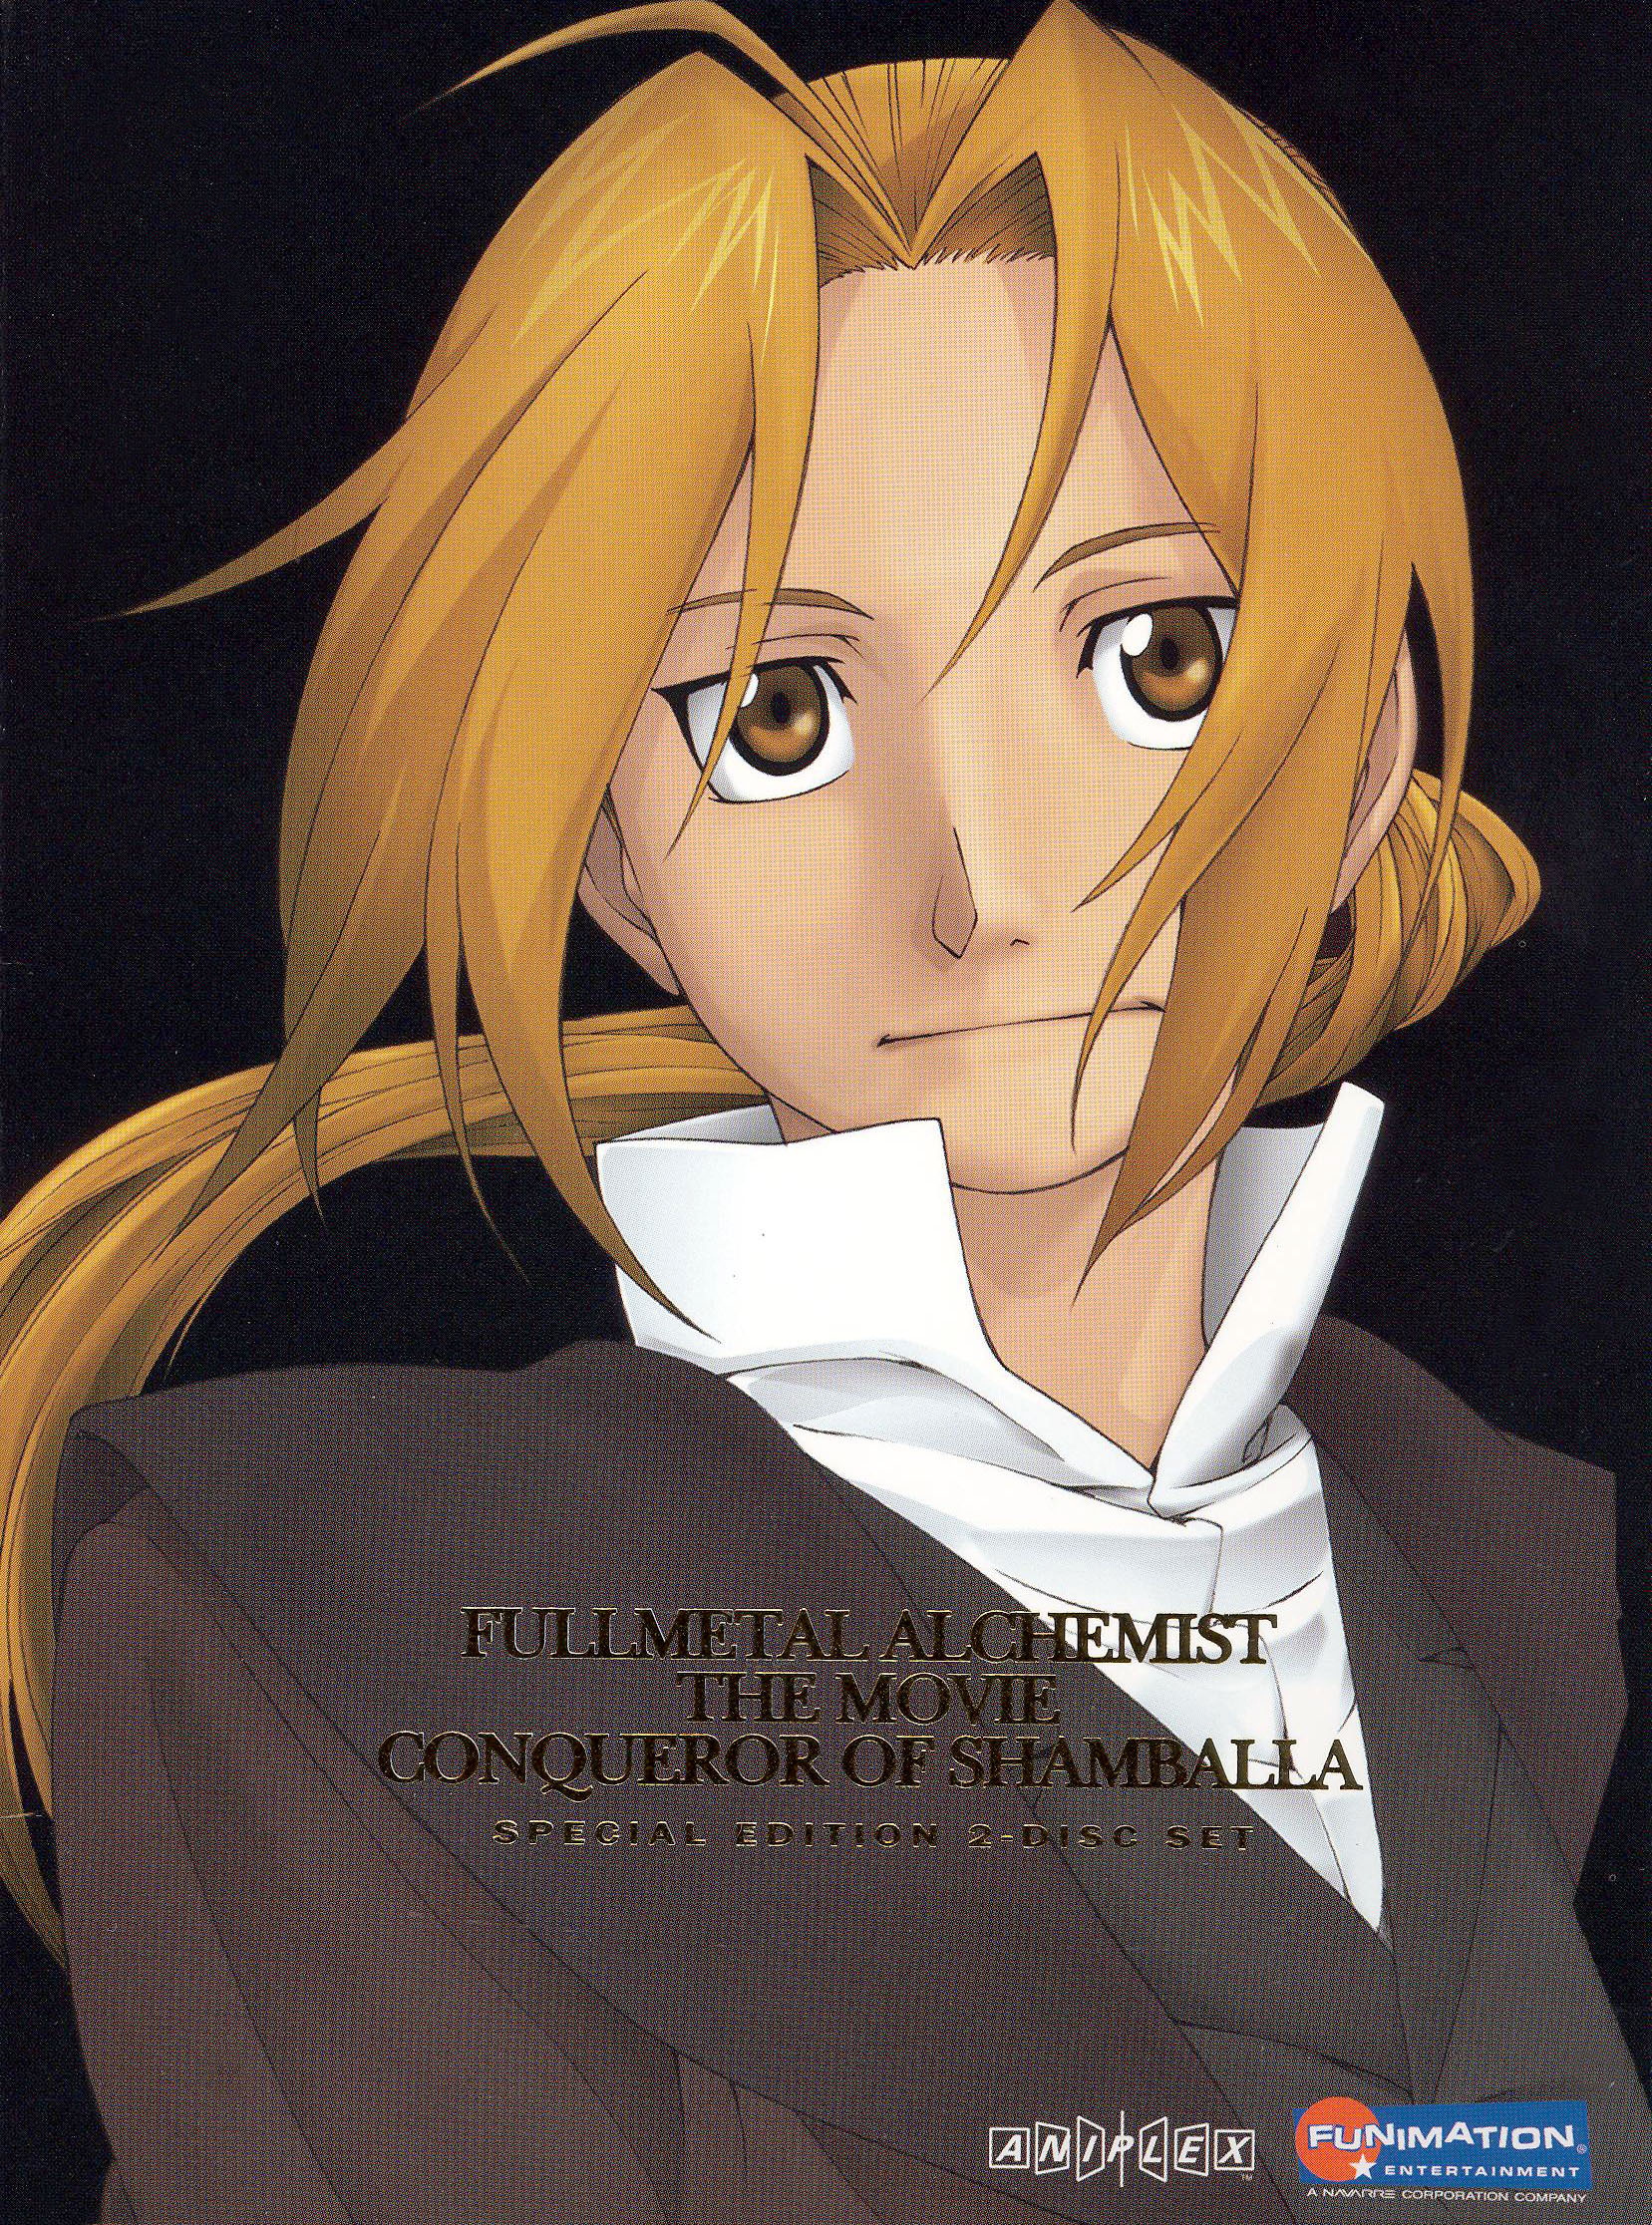 Best Buy: Fullmetal Alchemist: Brotherhood Collection Two [5 Discs] [DVD]